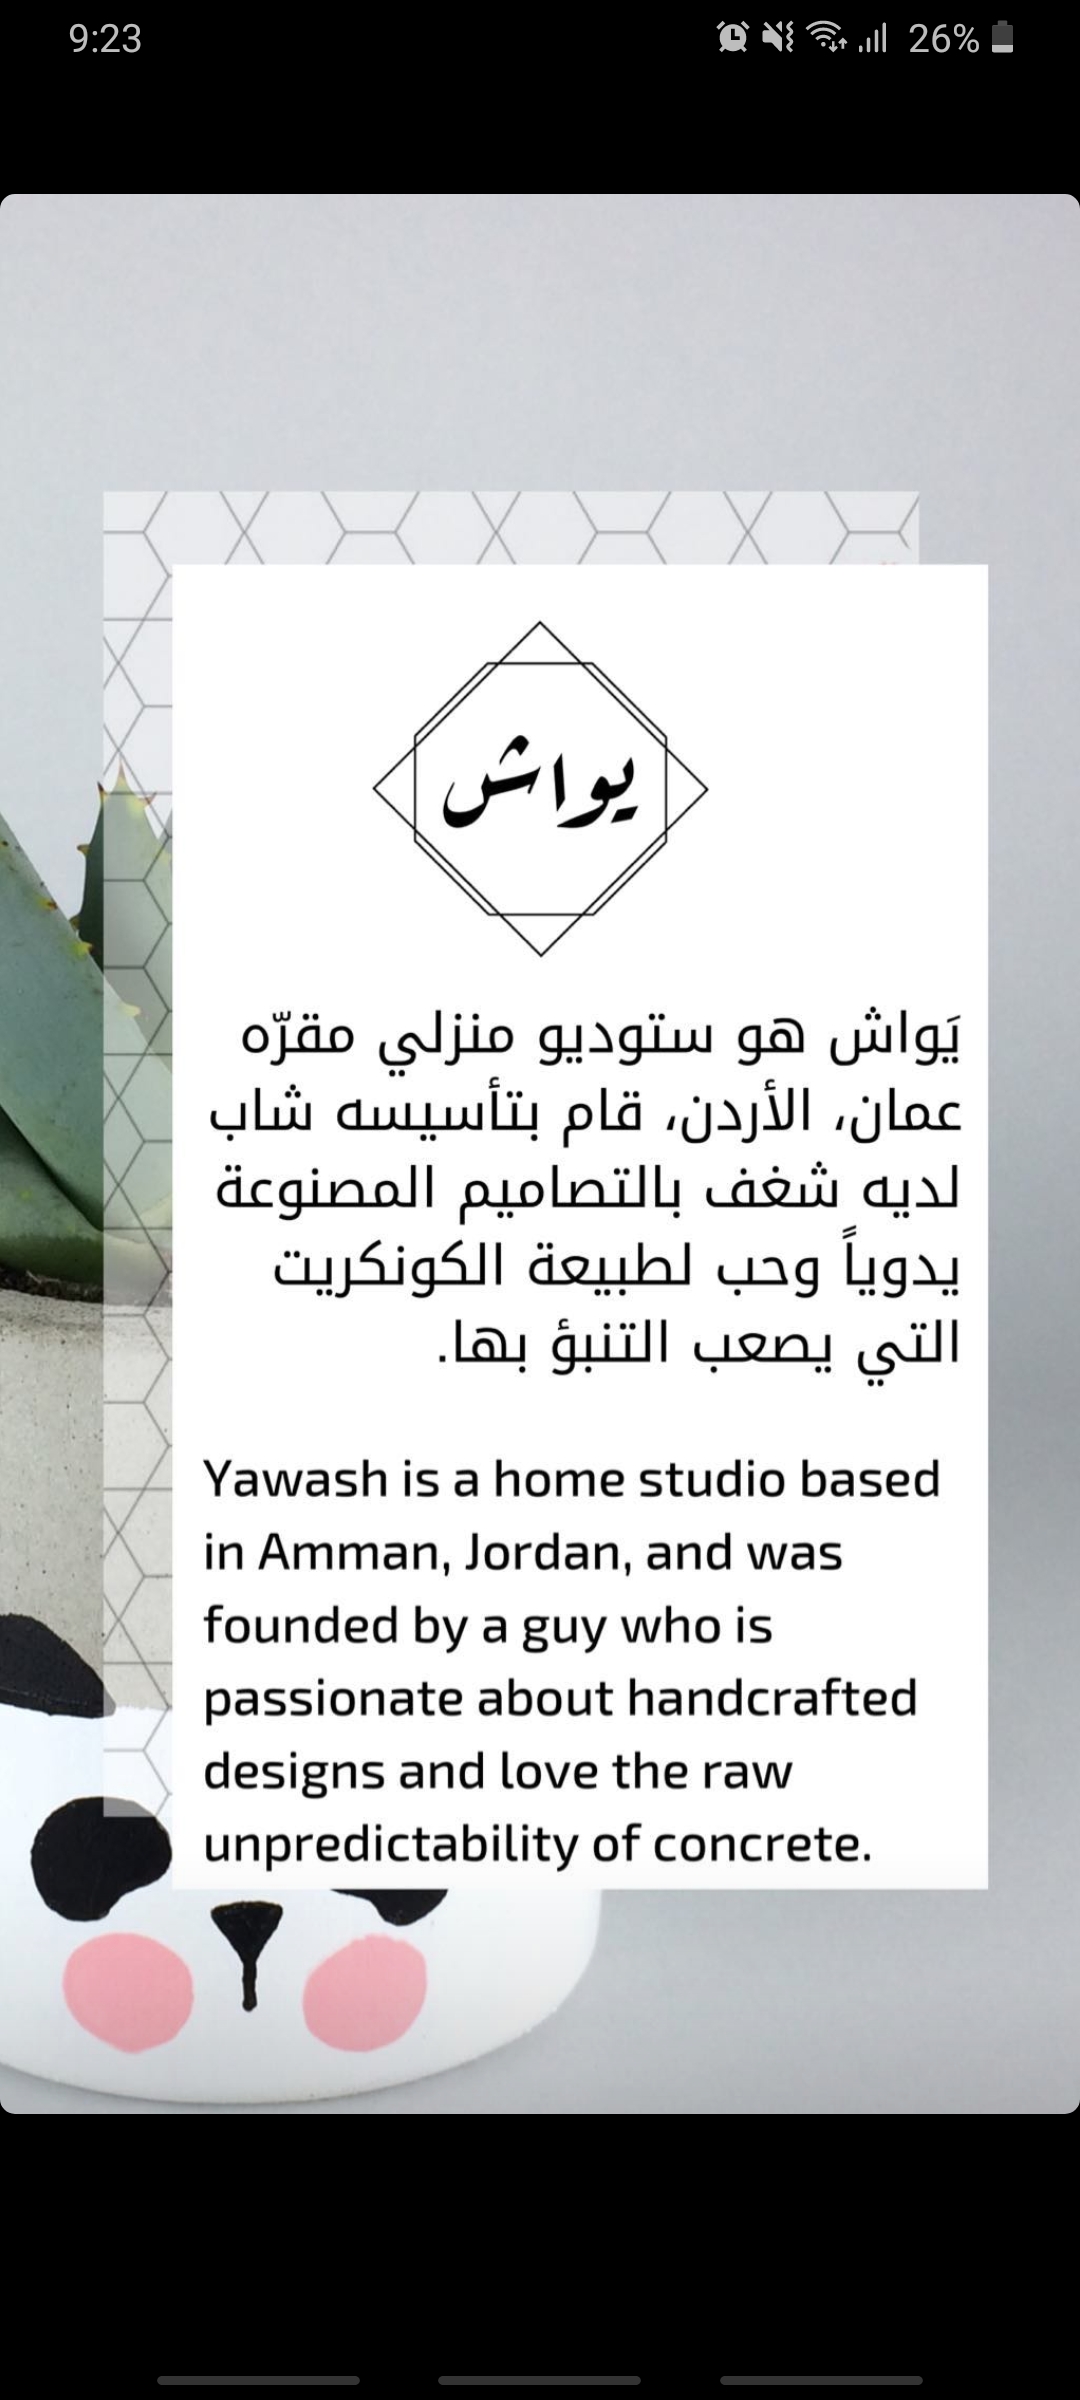 Yawash studio